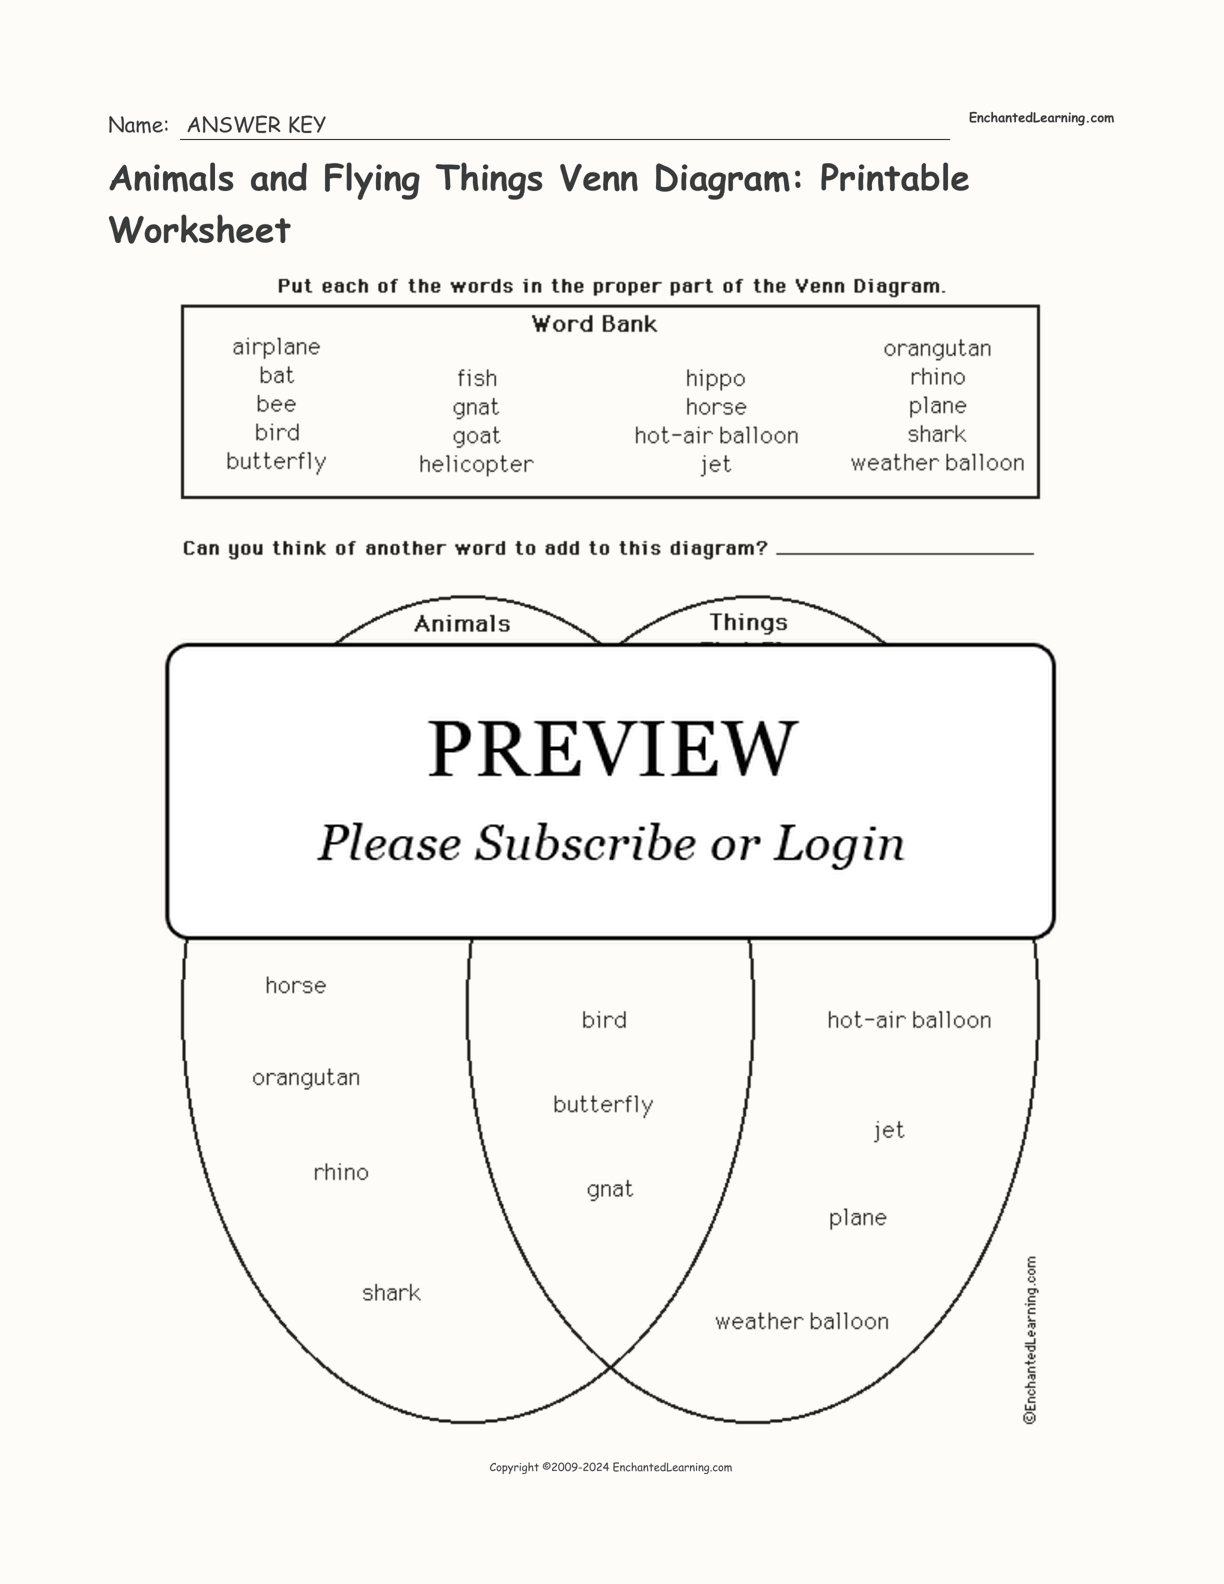 Animals and Flying Things Venn Diagram: Printable Worksheet interactive worksheet page 2